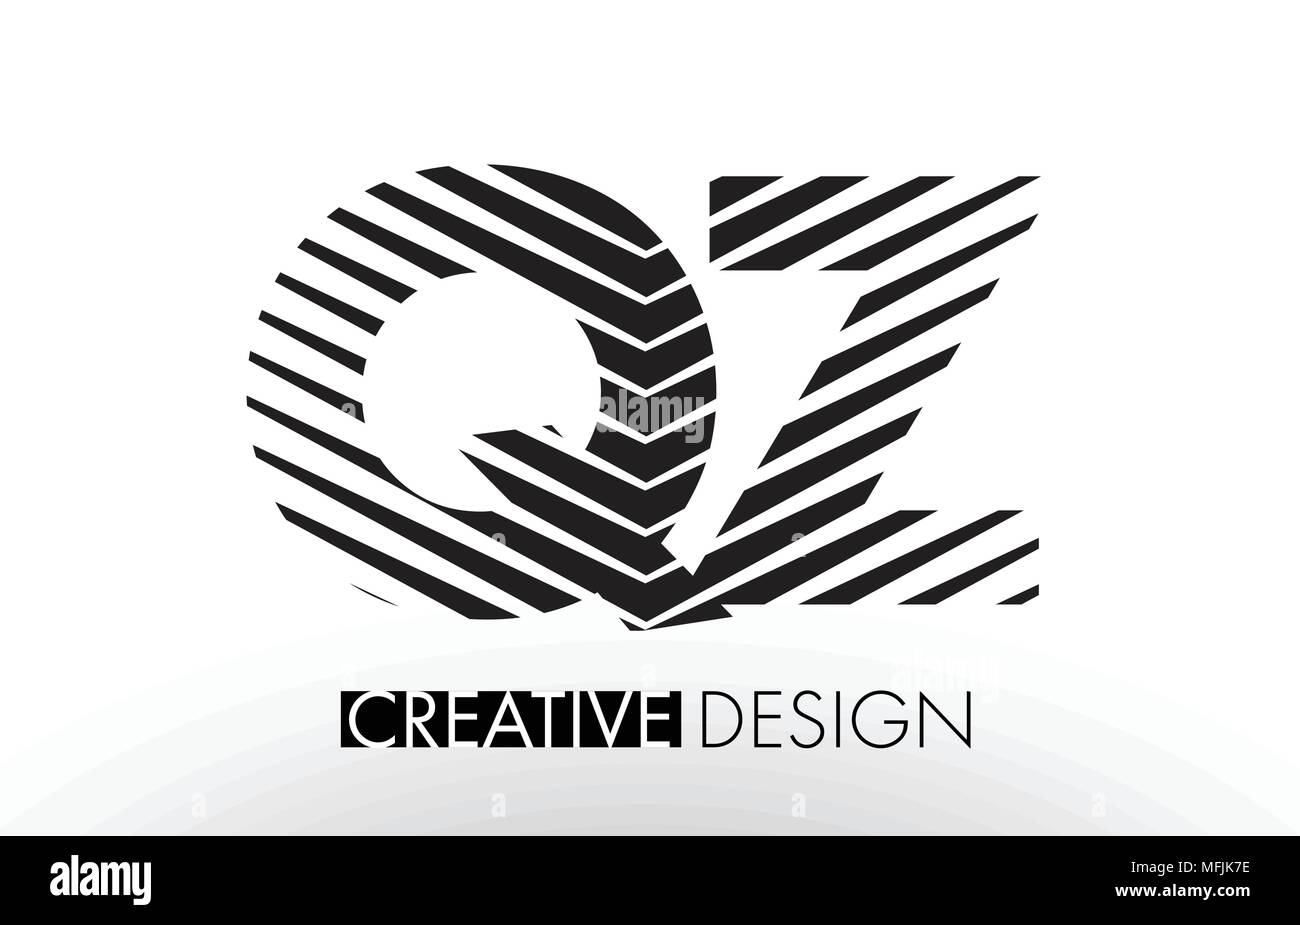 QZ Q Z Lines Letter Design with Creative Elegant Zebra Vector Illustration. Stock Vector